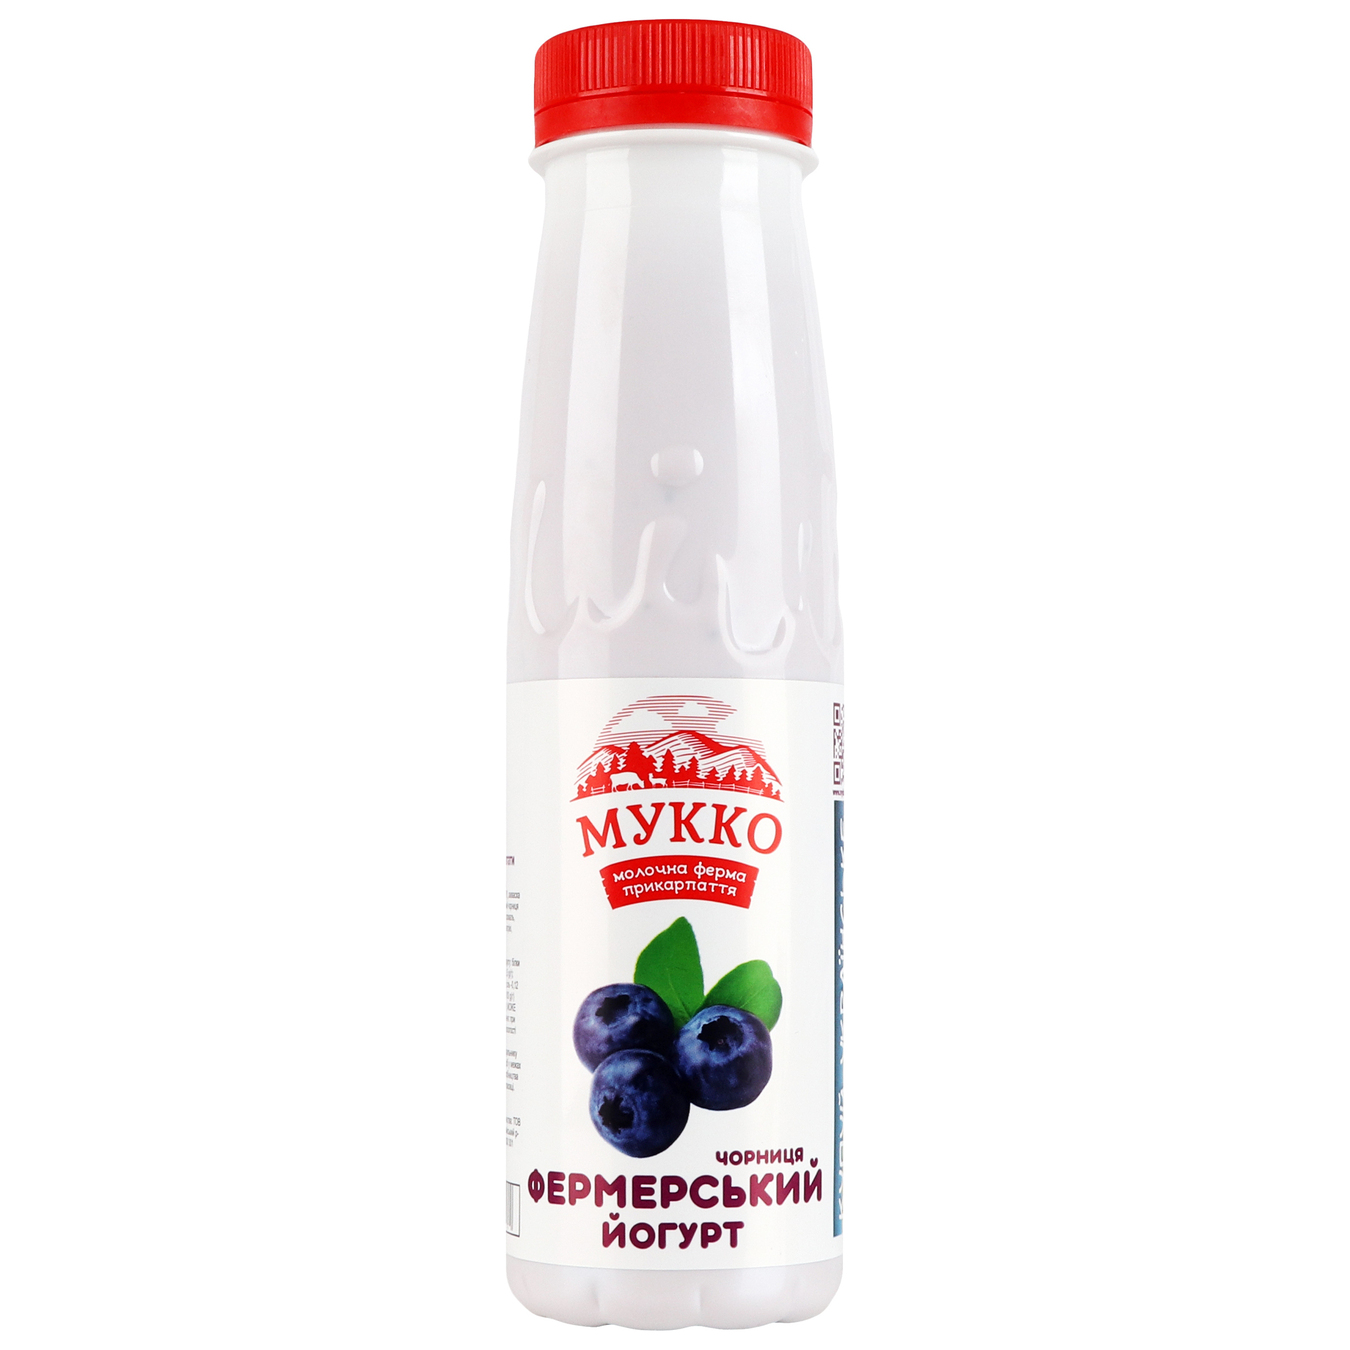 Yogurt Mukko blueberry 3.5% 250g bottle